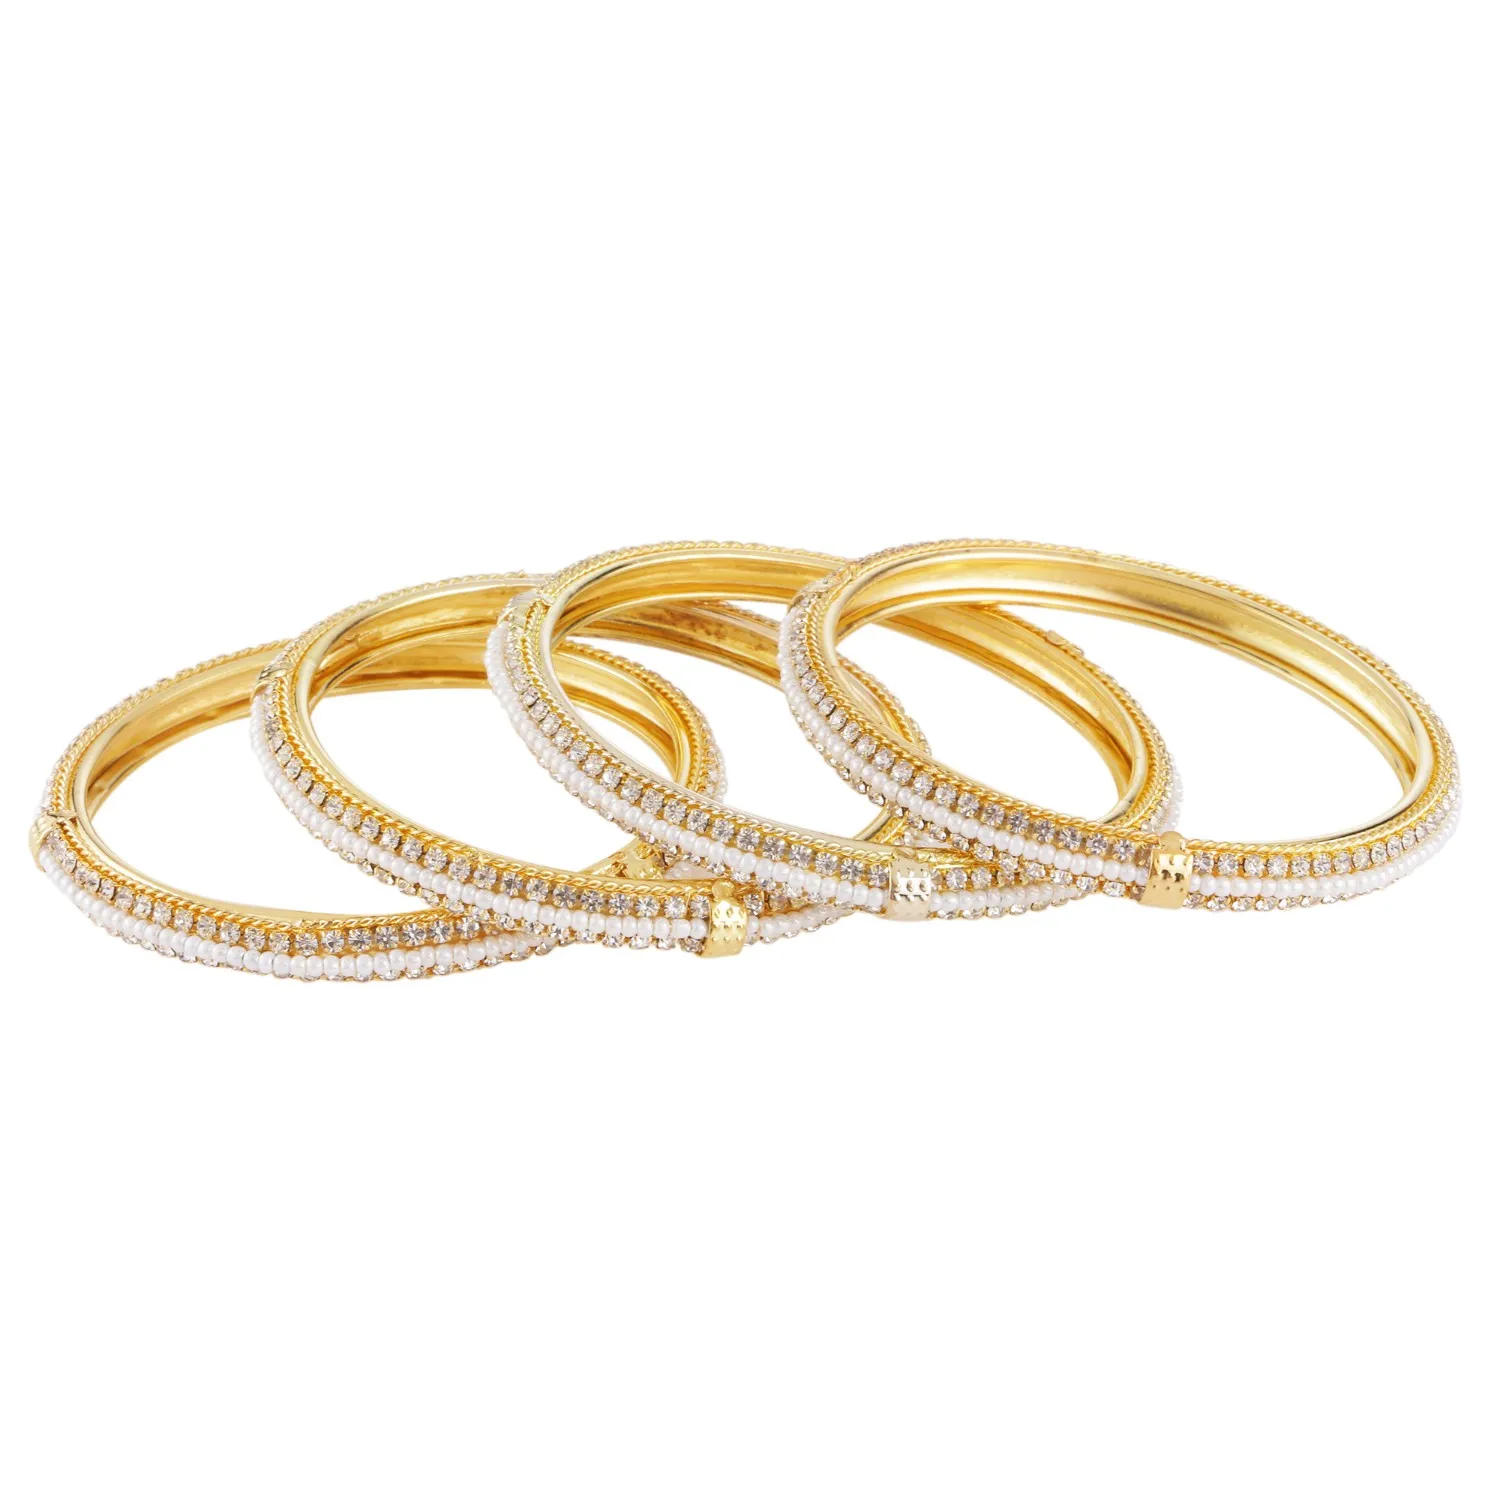 Indian Bollywood Partywear Gold Tone Cubic Zirconium CZ Bangle Bracelet Jewelry 